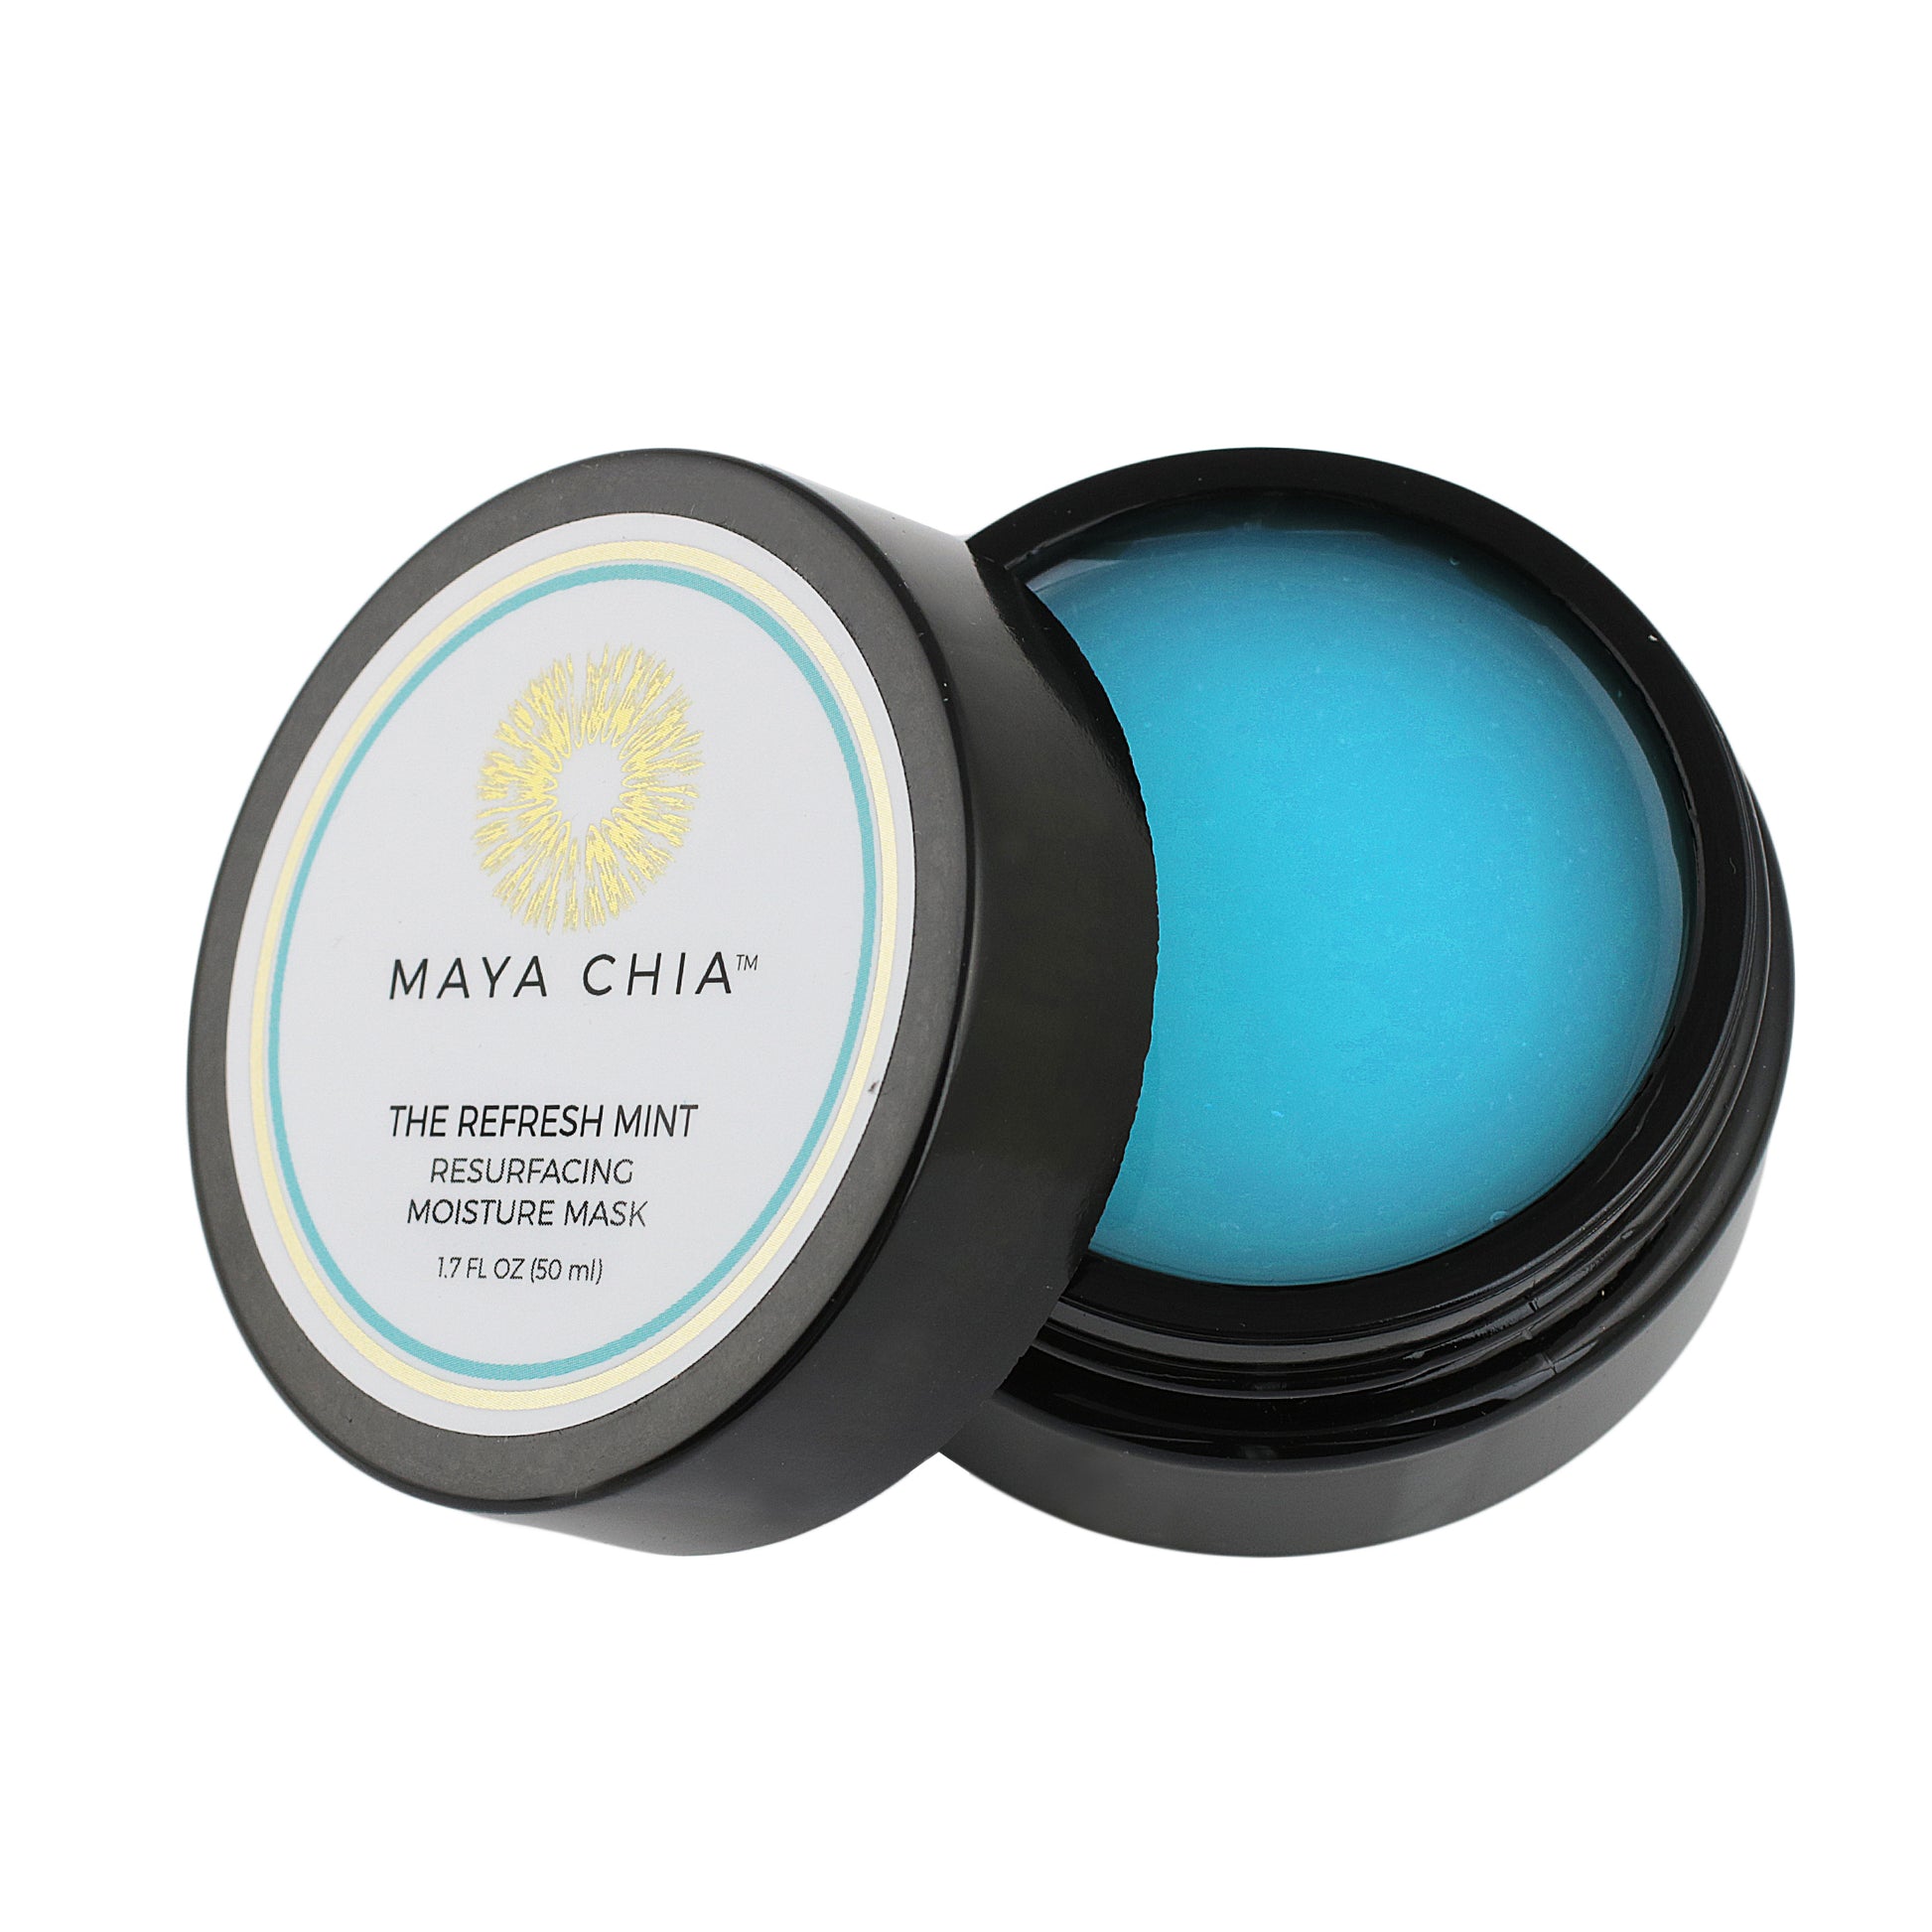 Maya chia, Maya chia mask, Maya chia resurfacing mask, Maya chia the refresh mint, the refresh mint